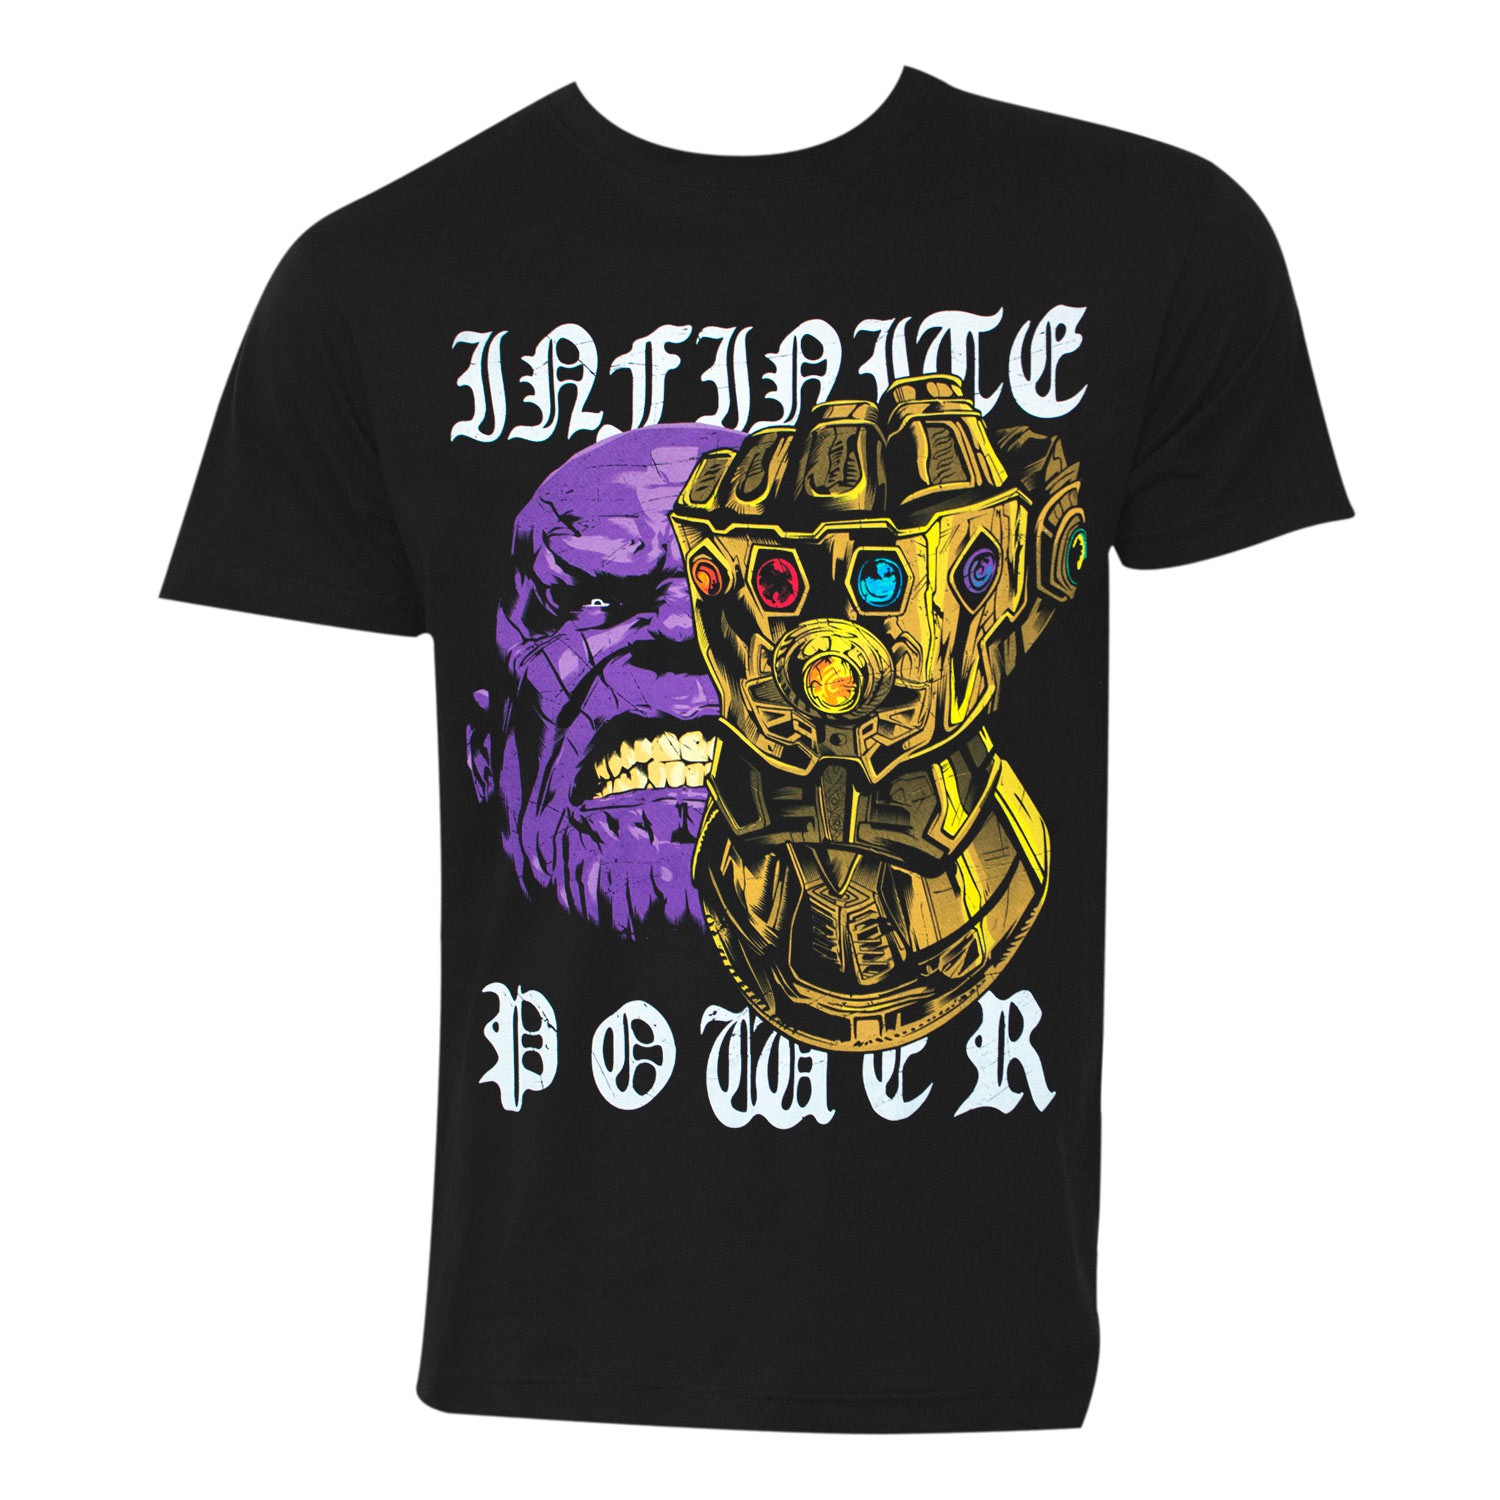 Avengers Infinity War Thanos Infinite Power Men's Black T-Shirt